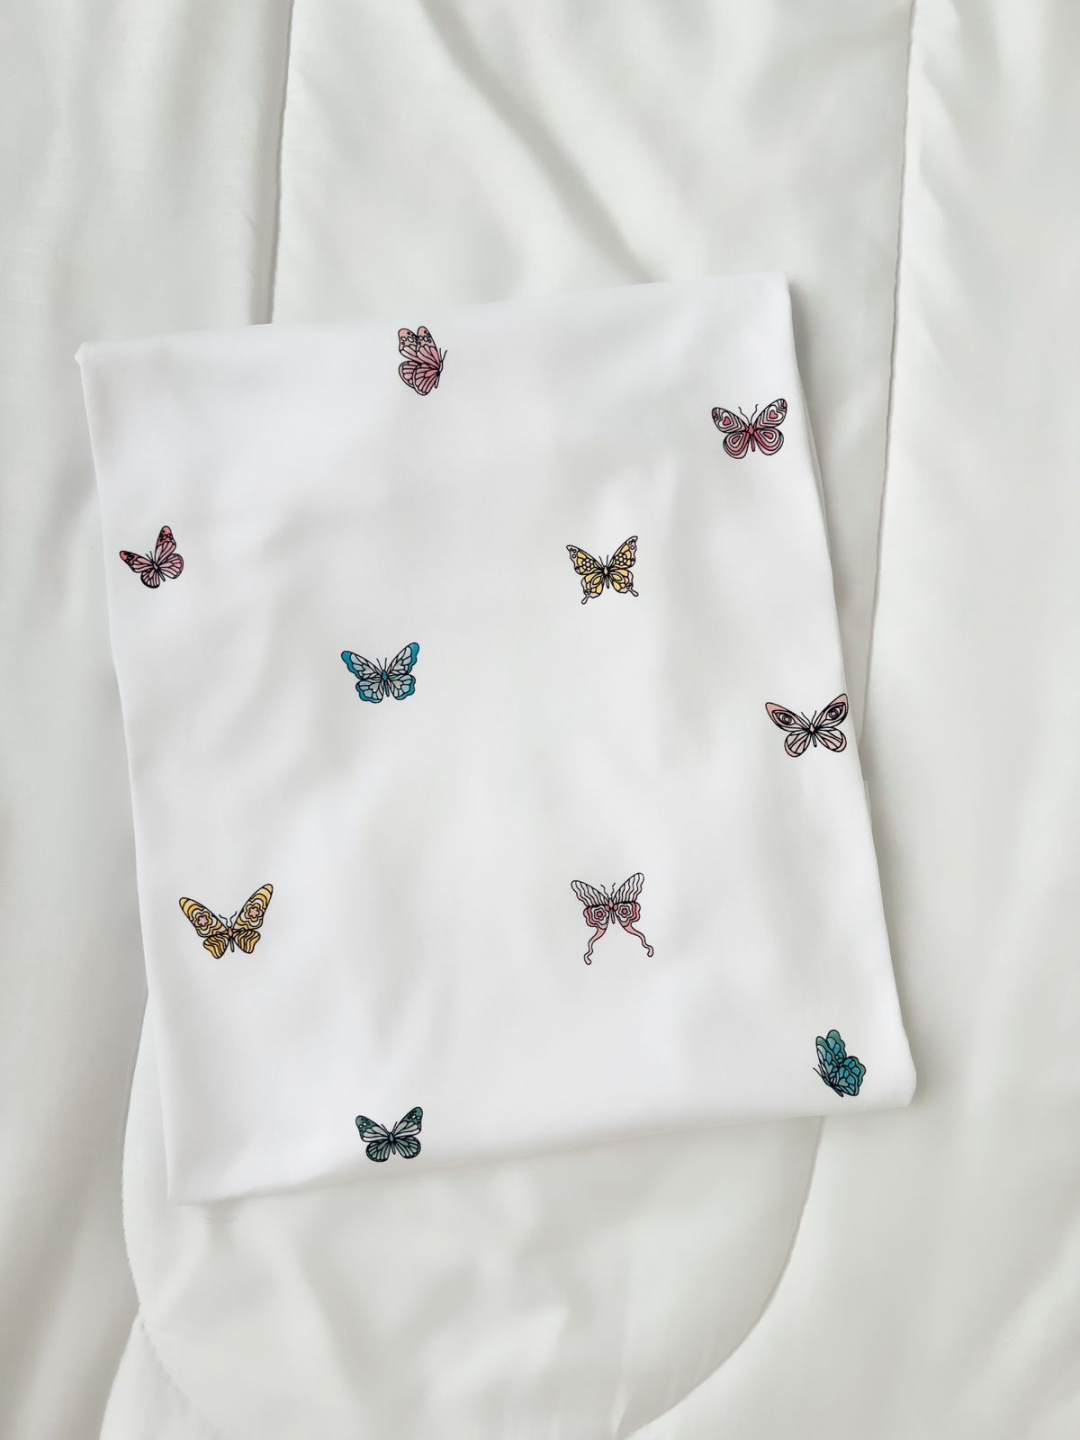 Camiseta fondeo mariposas